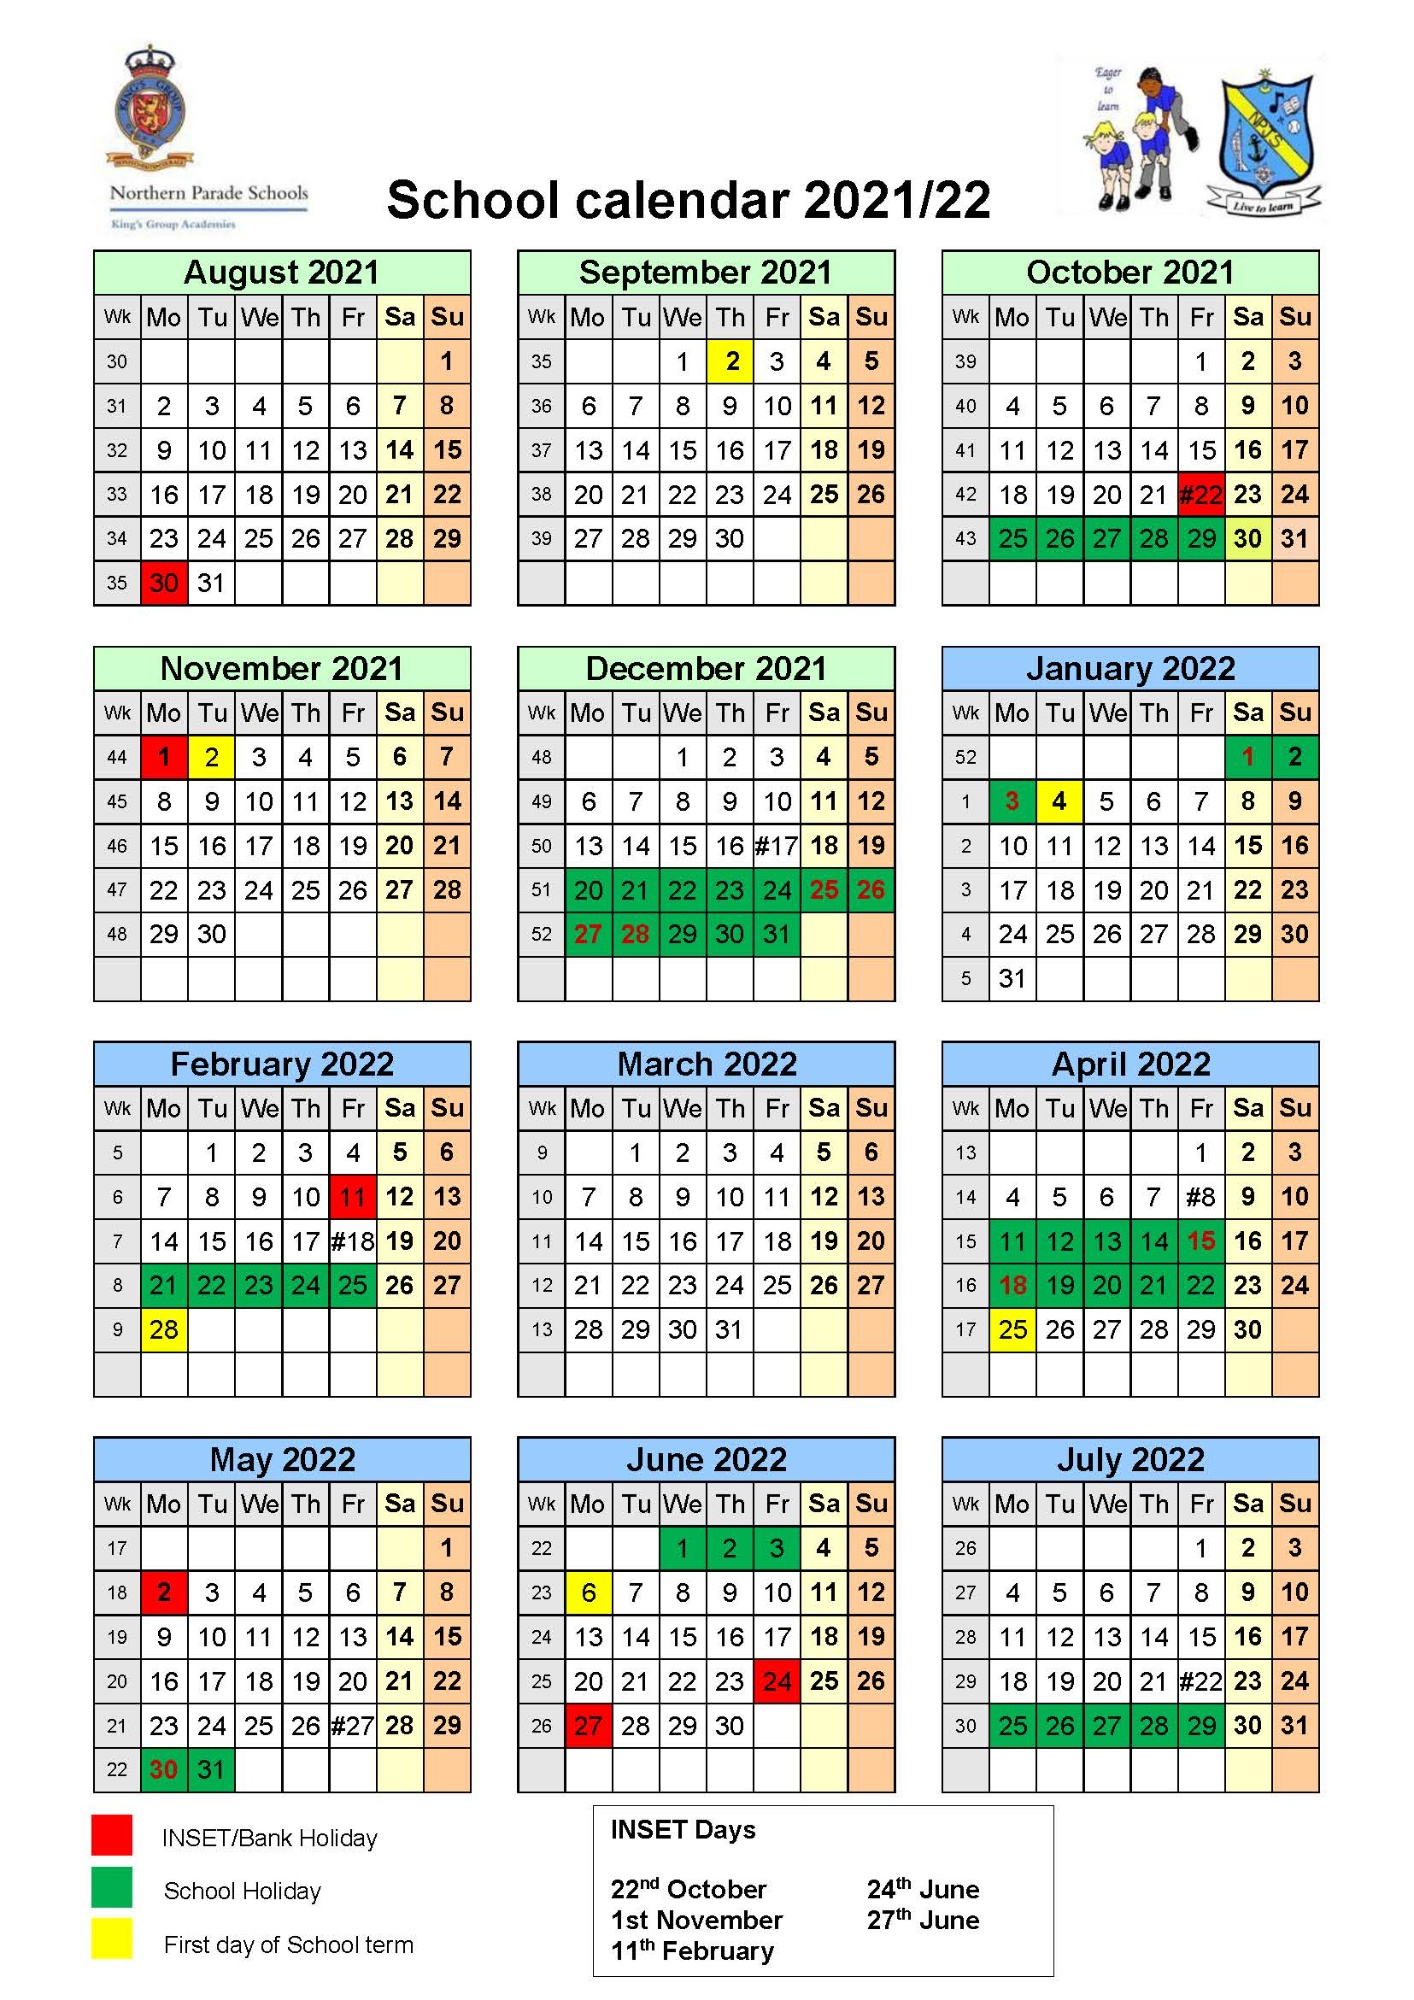 Hampshire Academic Calendar 2022 King's Academy Northern Parade - Term Dates